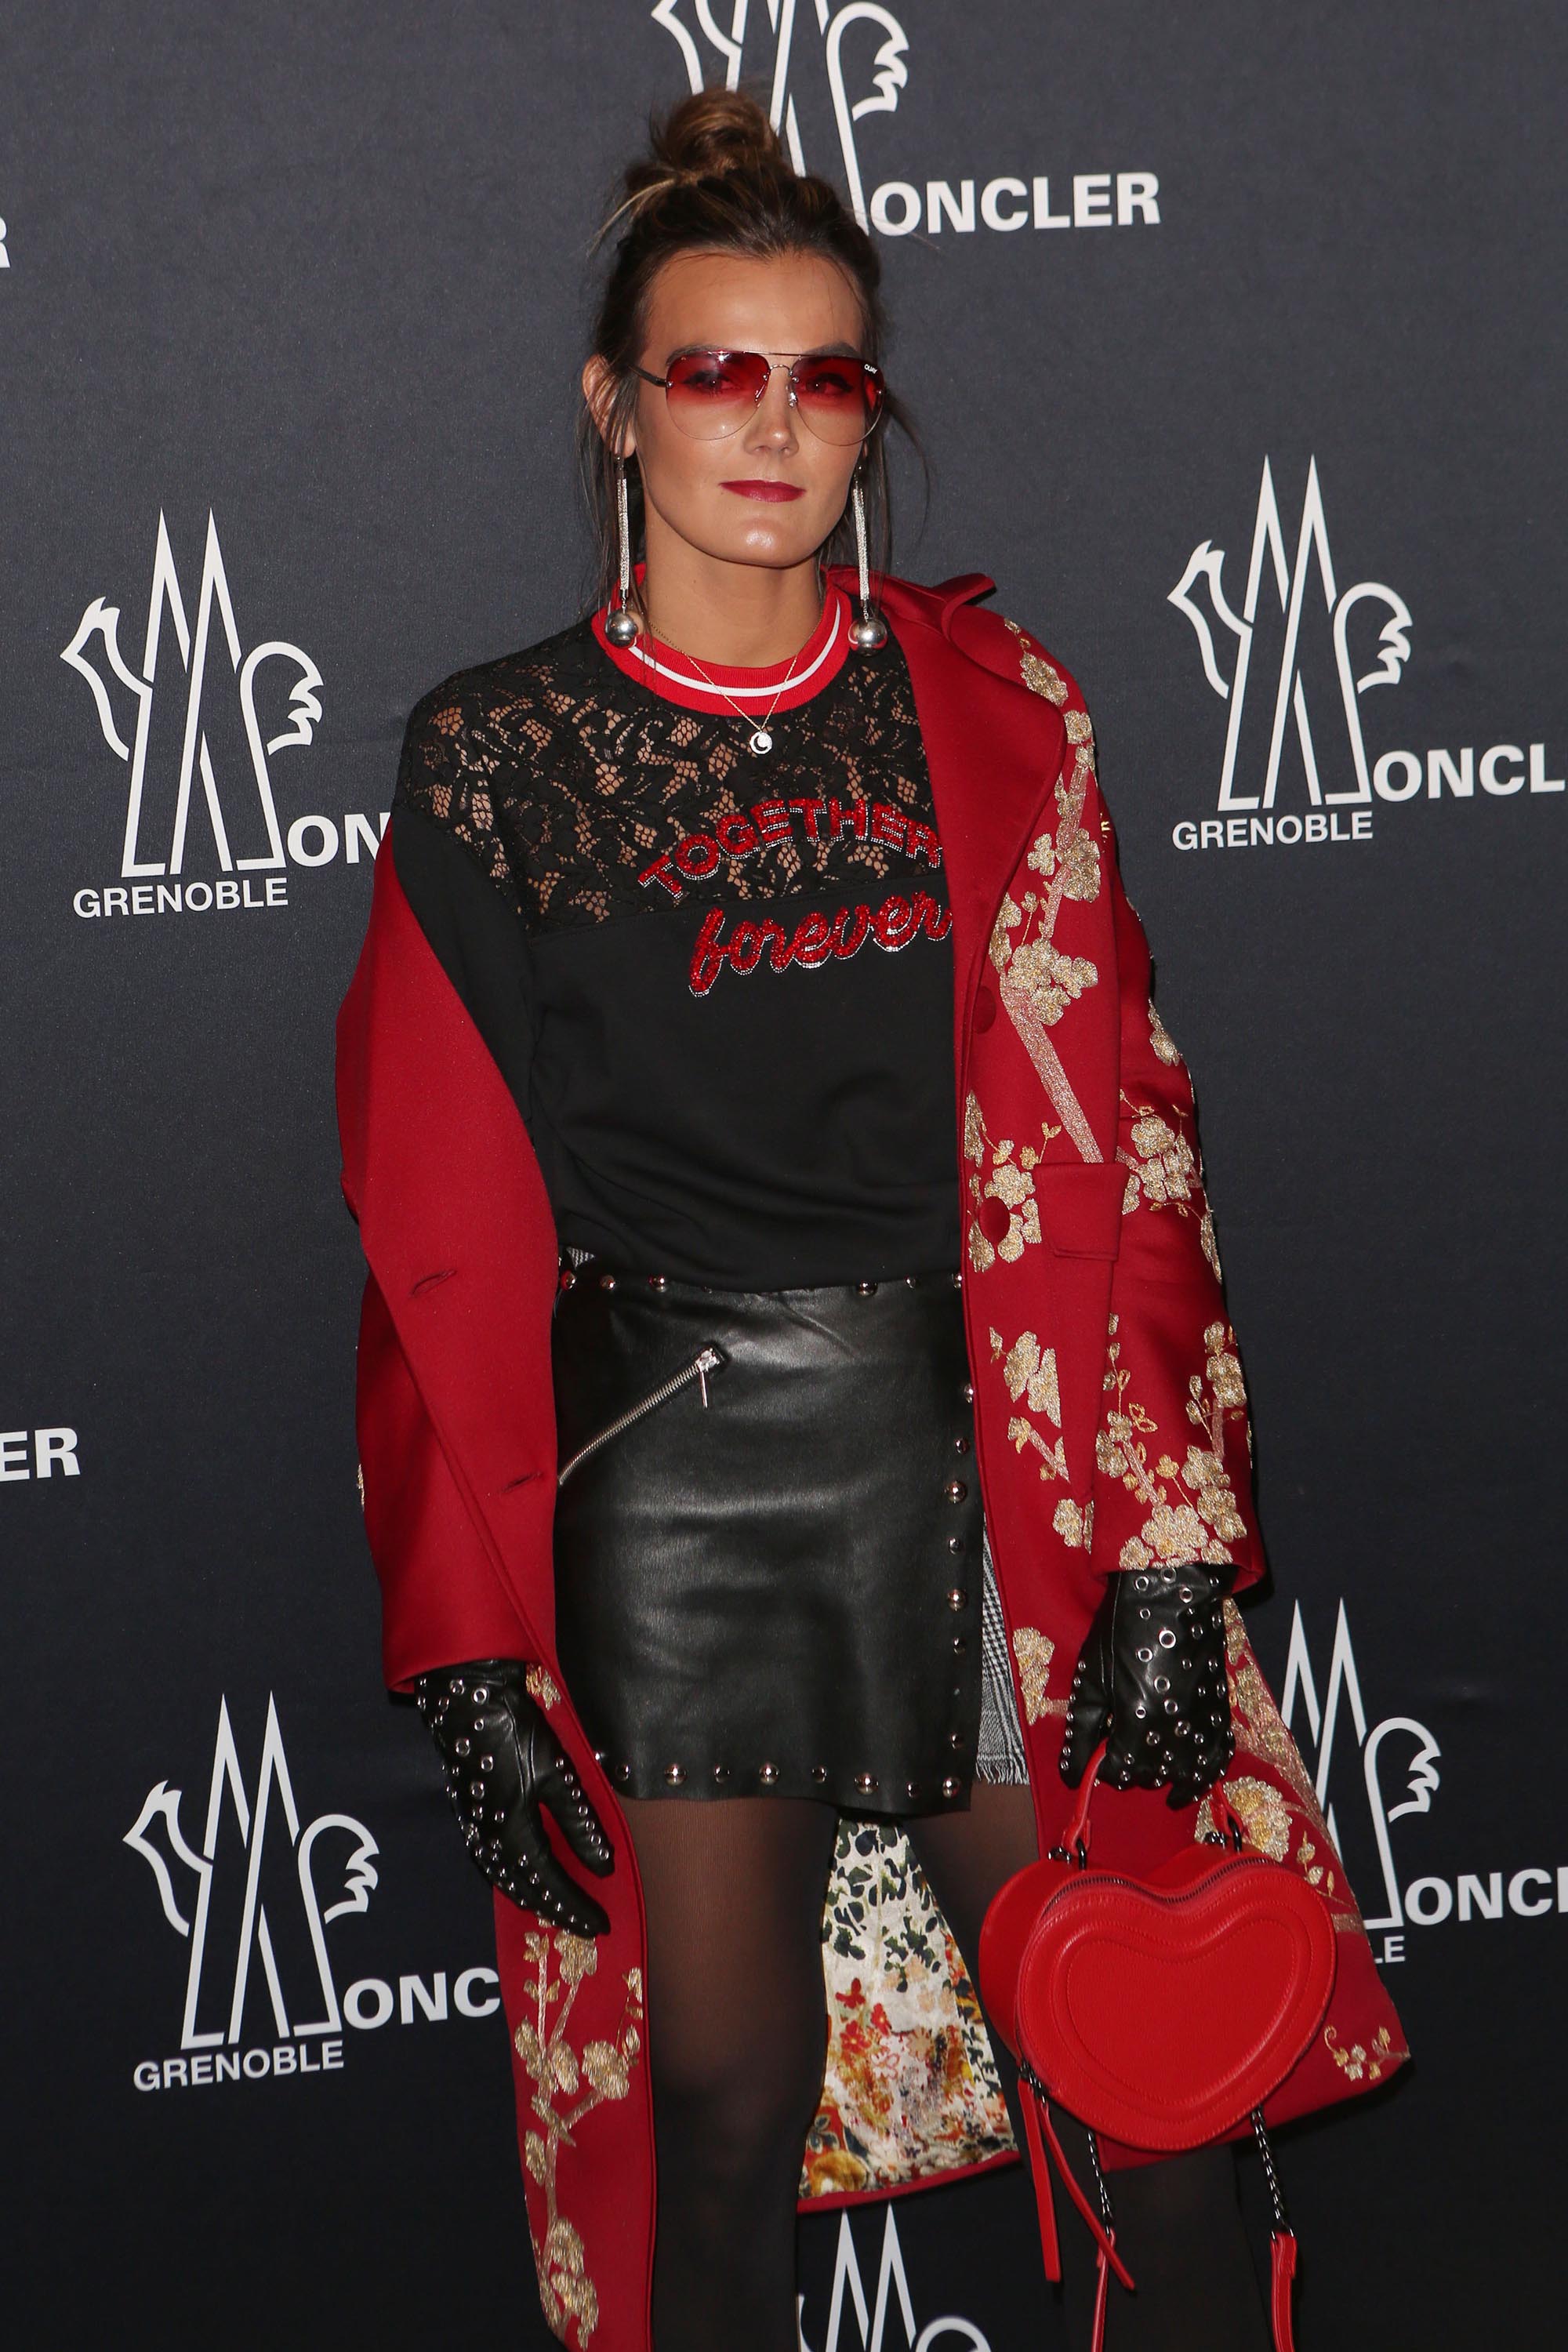 Tessa Barton attends the Moncler Grenoble fashion show